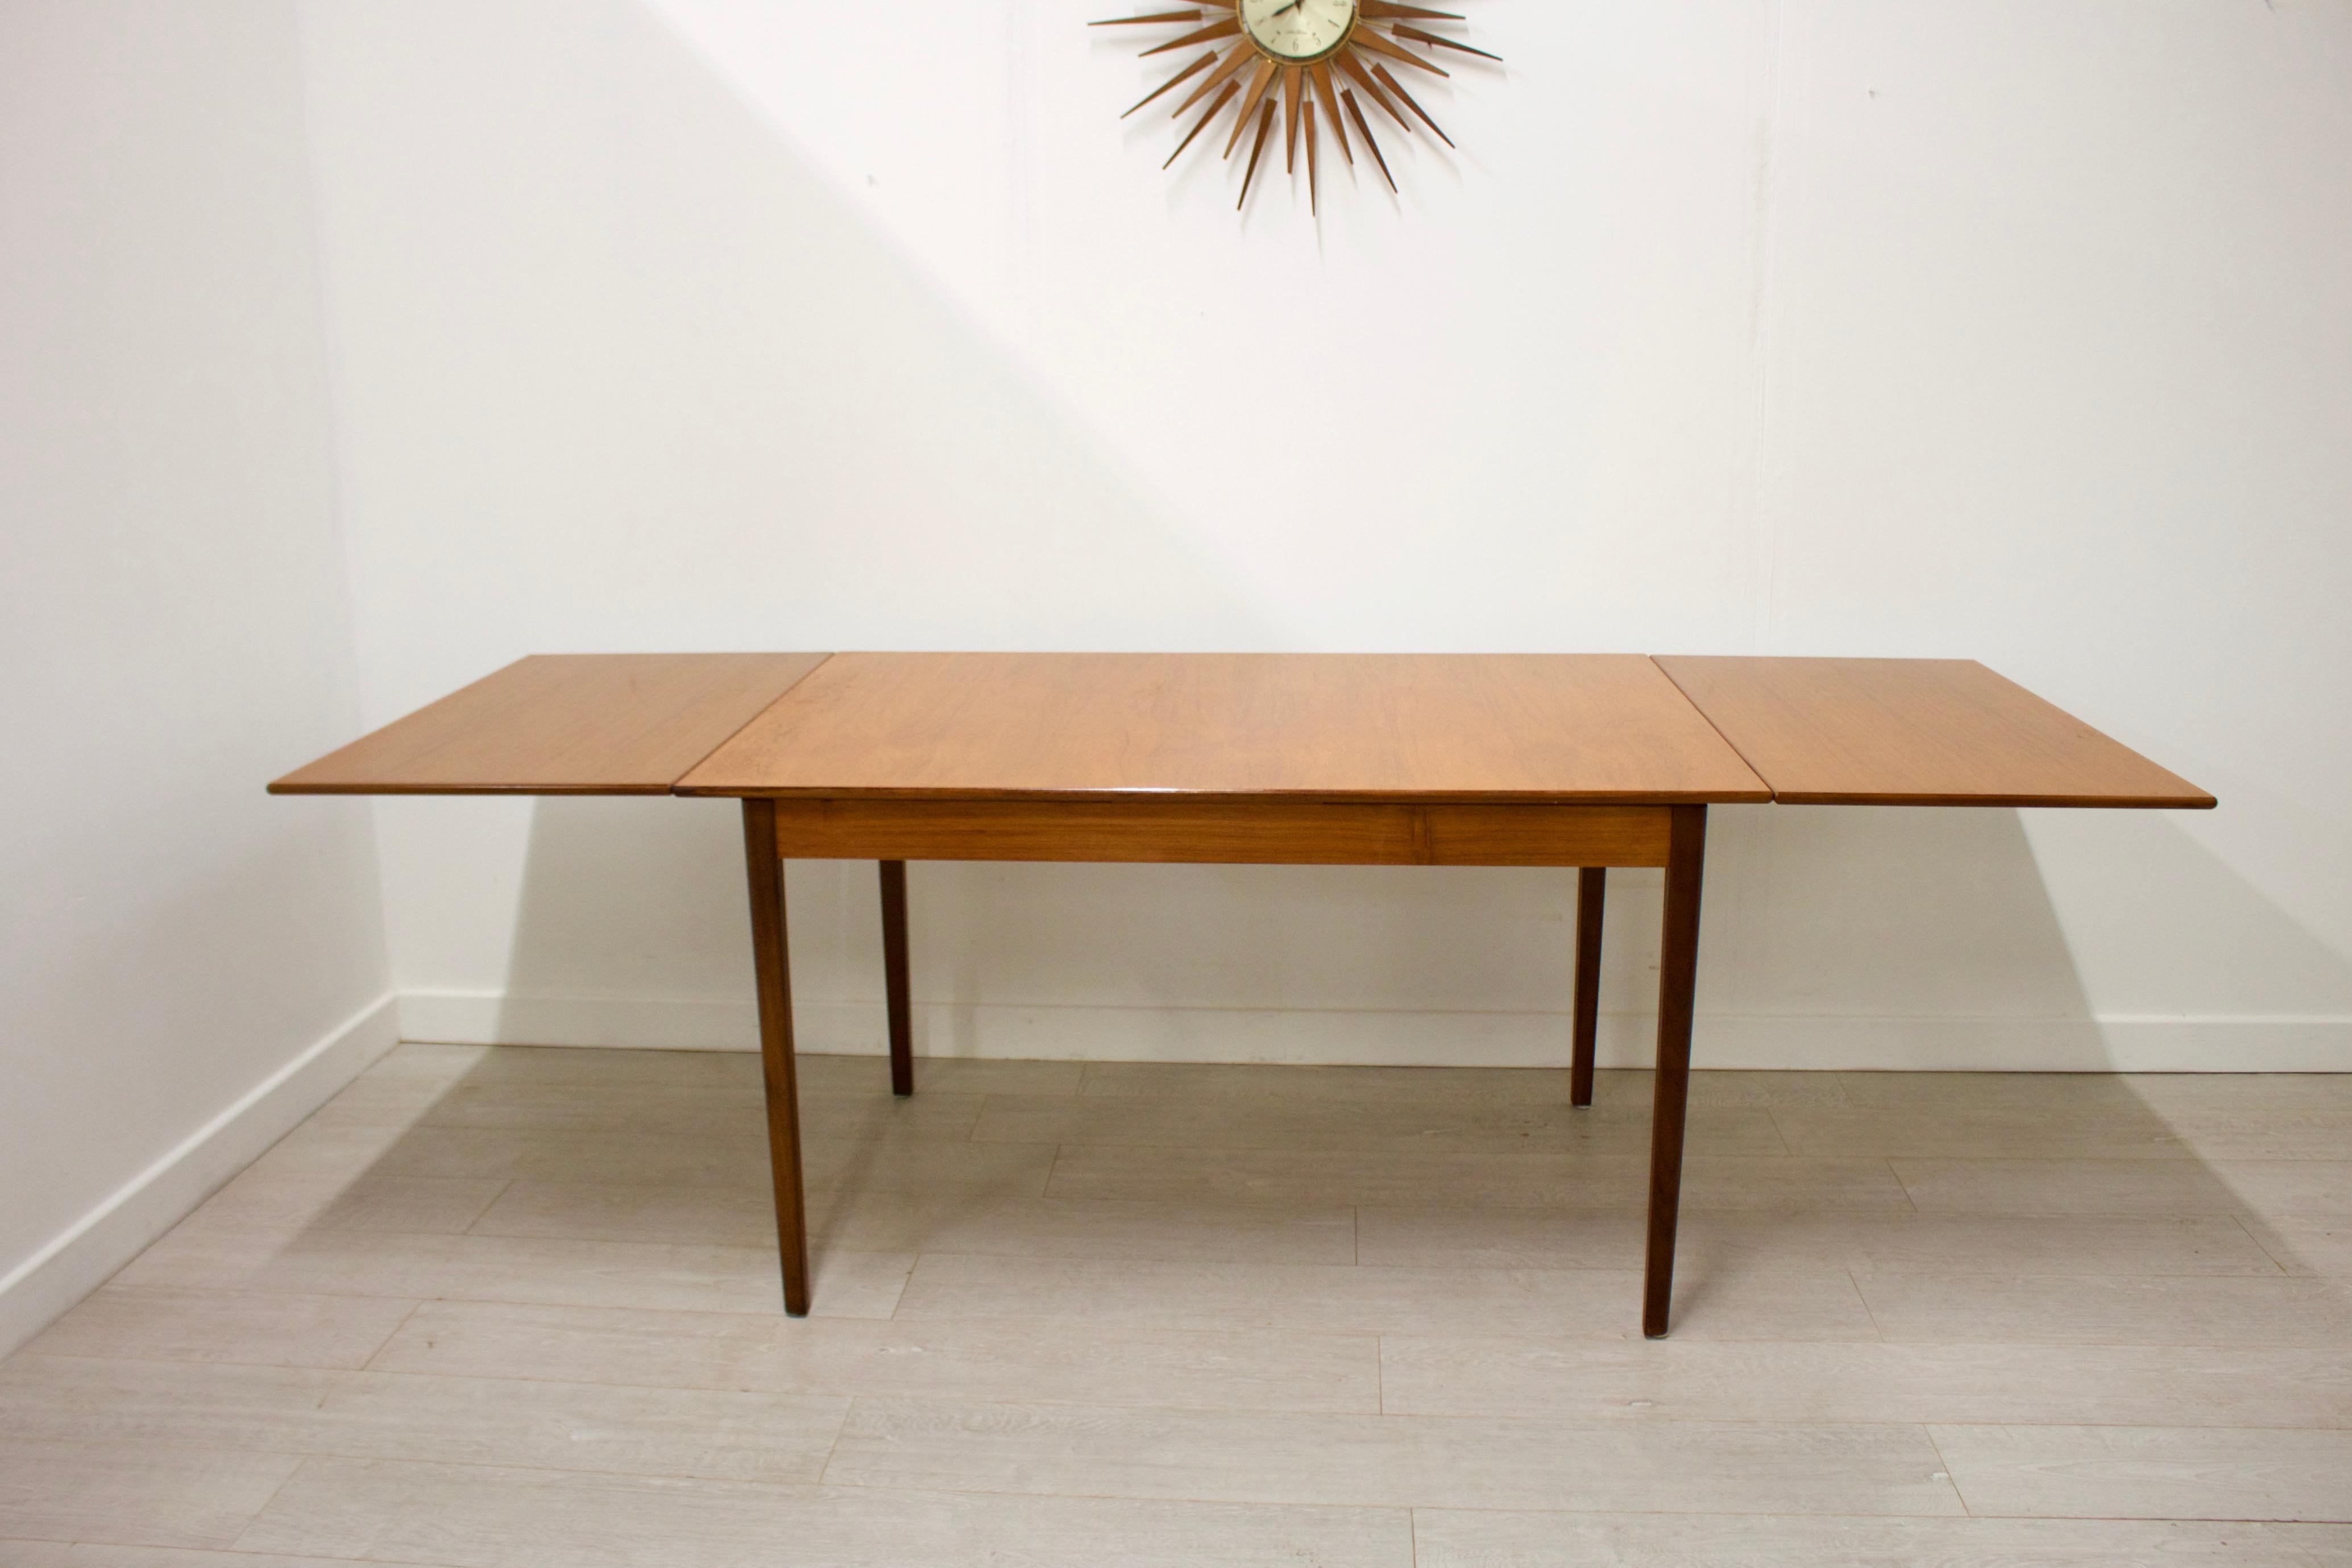 - Midcentury extending dining table.
- Made from teak and teak veneer
- Extended width 235 cm.